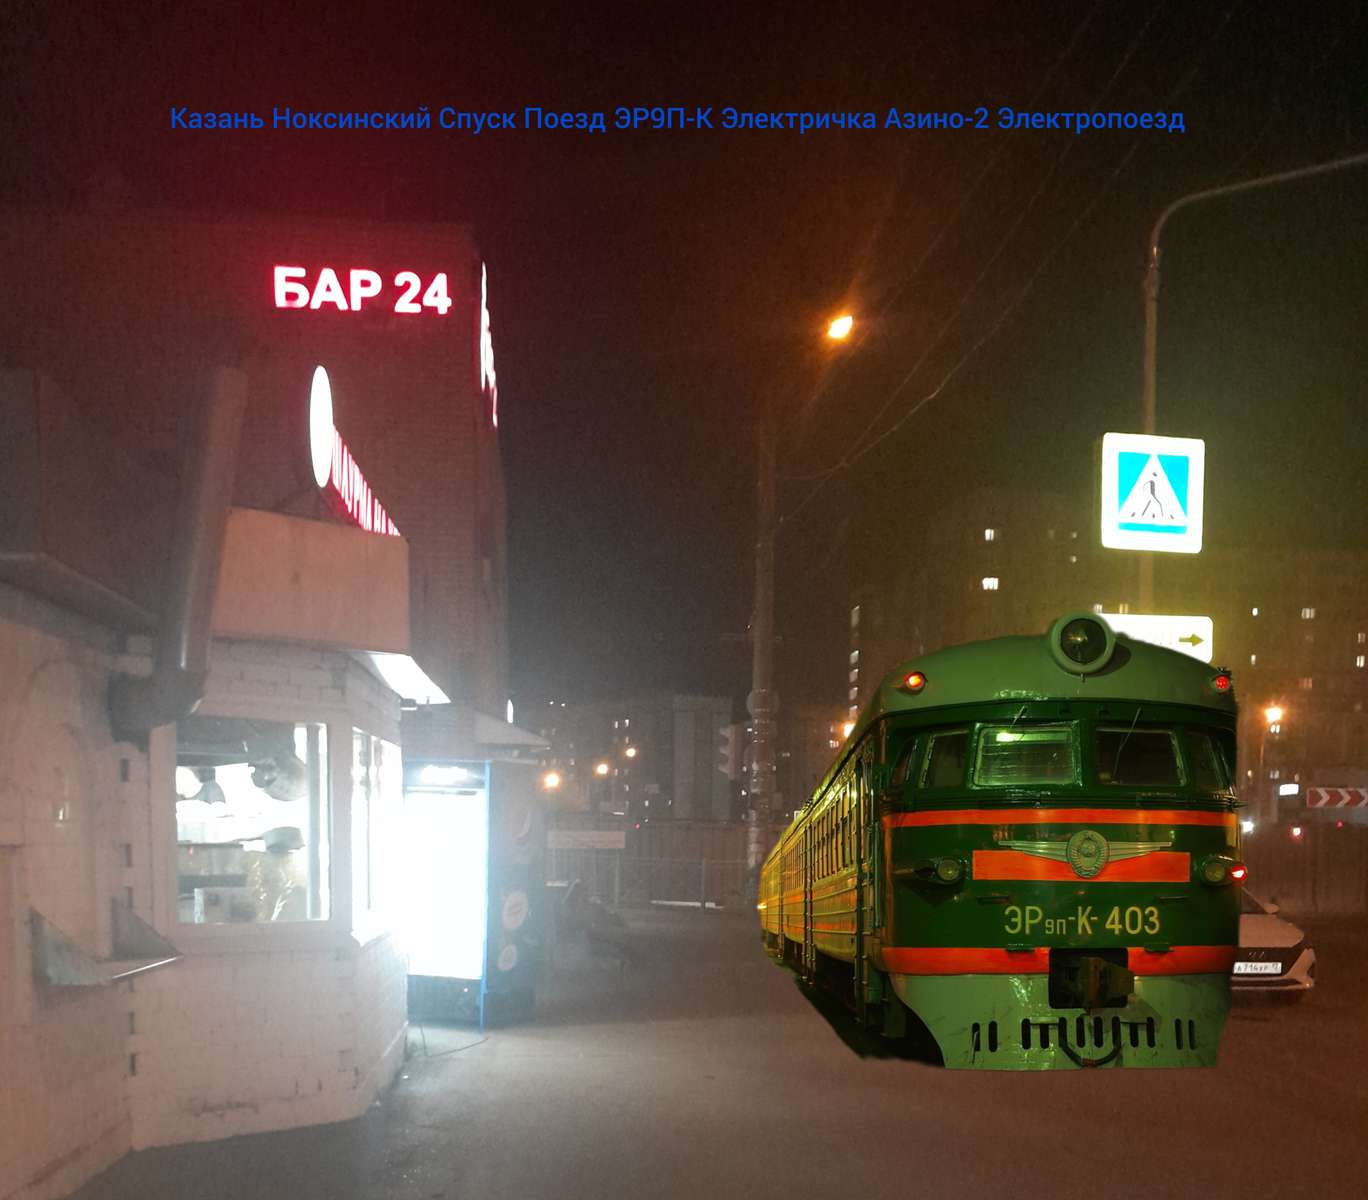 Trem de descida Kazan Noksinsky ER9P-K Trem elétrico Az puzzle online